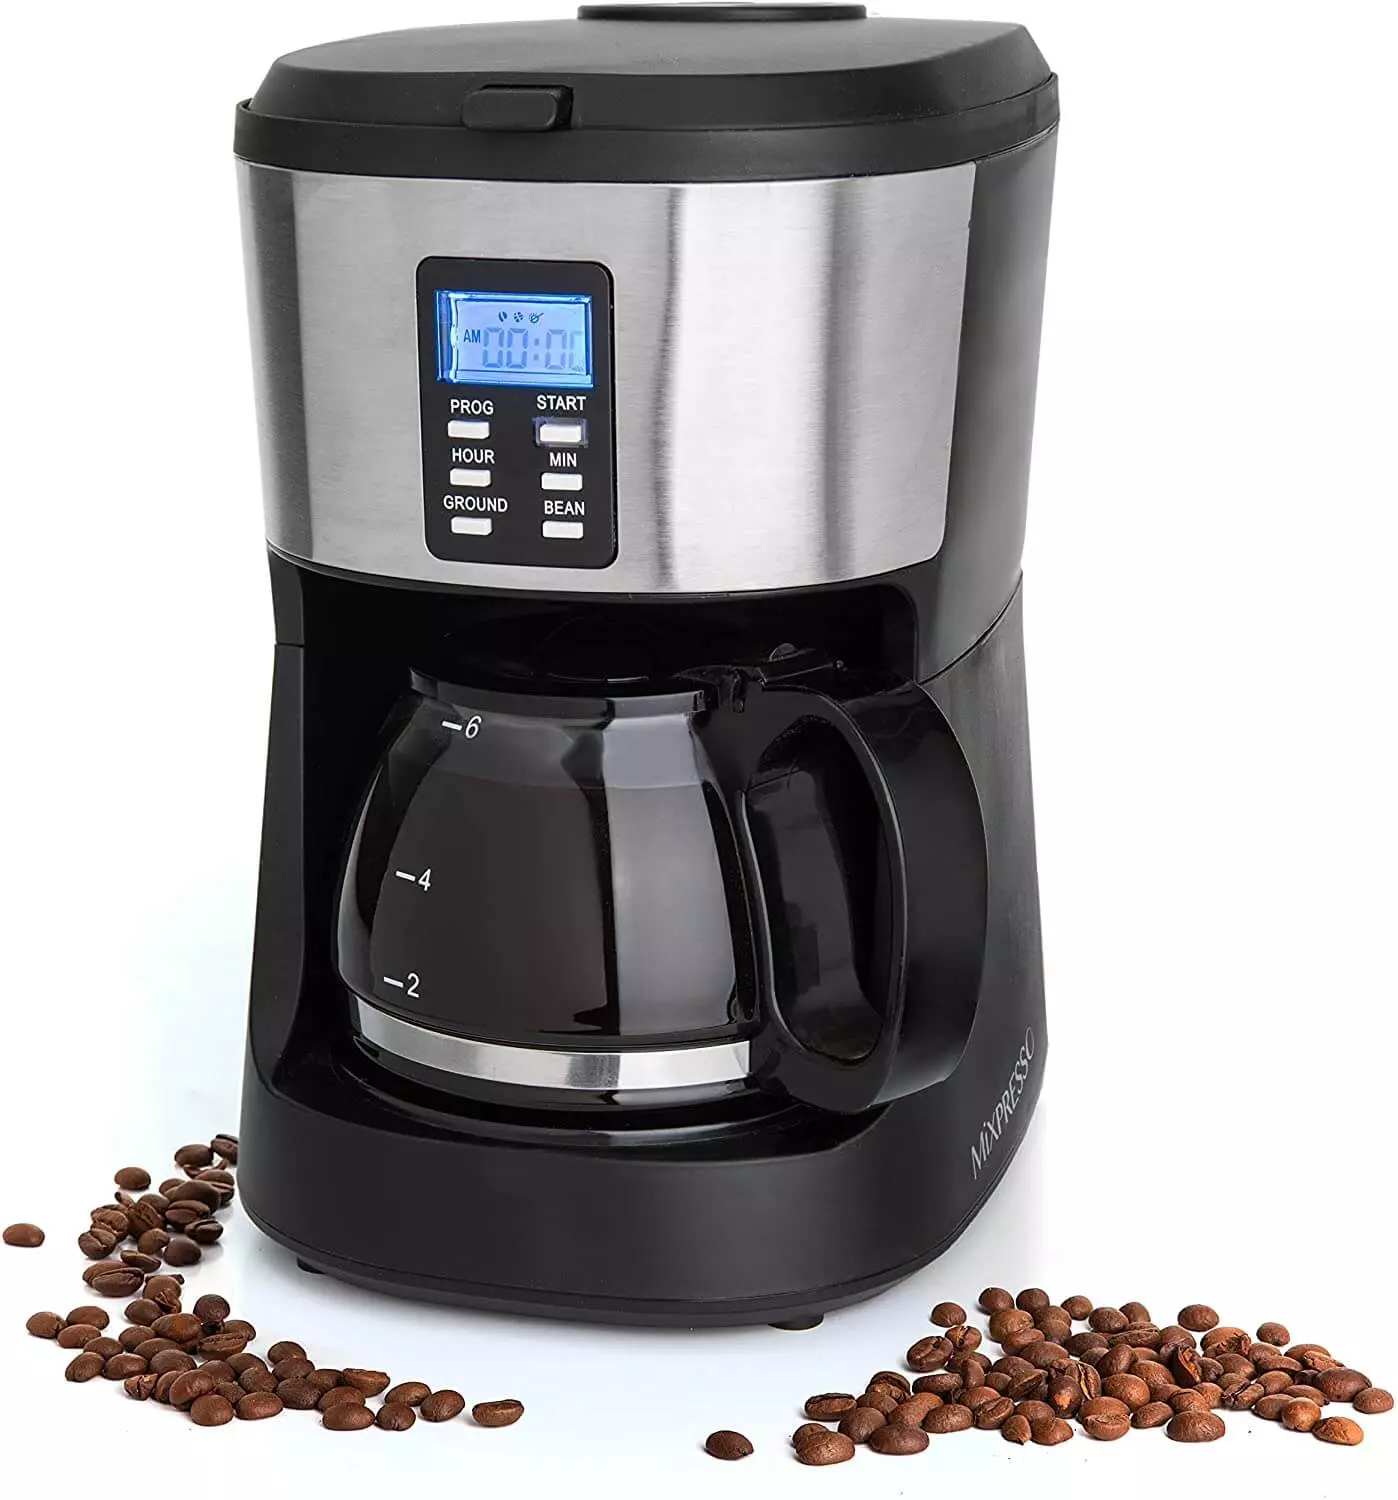 Mixpresso 5-Cup Drip Coffee Maker